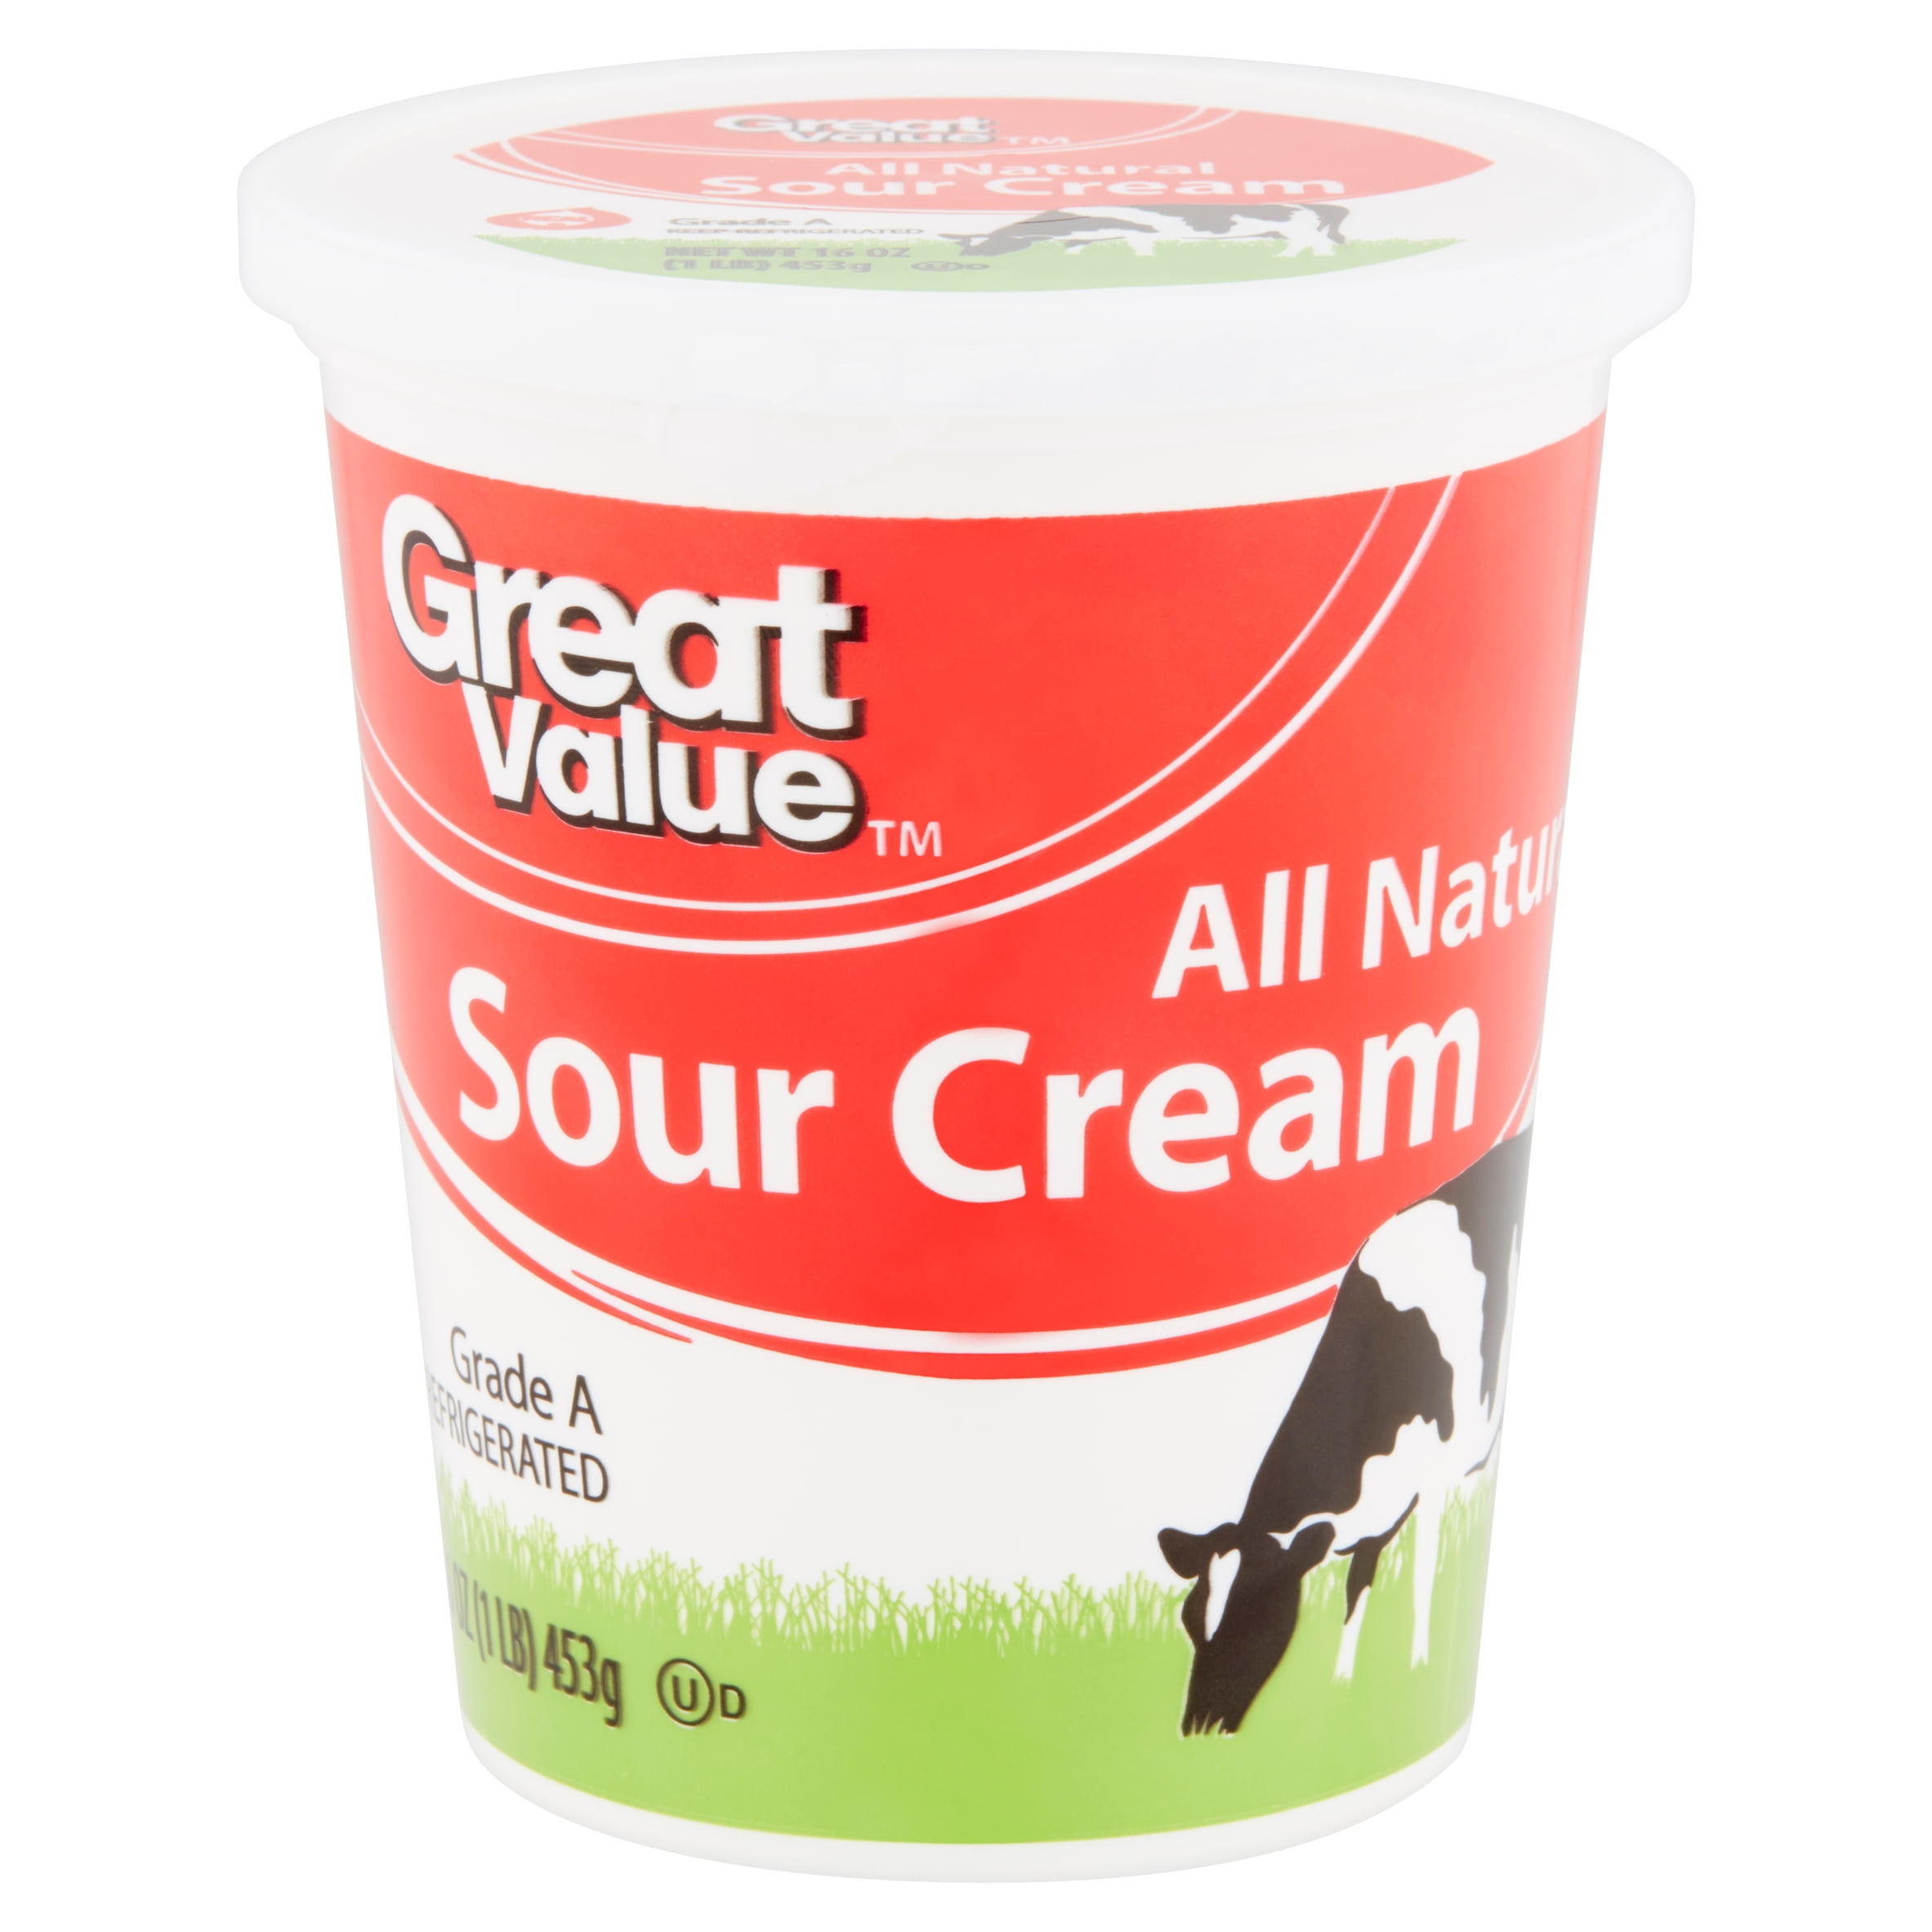 Great Value All Natural Sour Cream, 16 oz Tub - Walmart.com